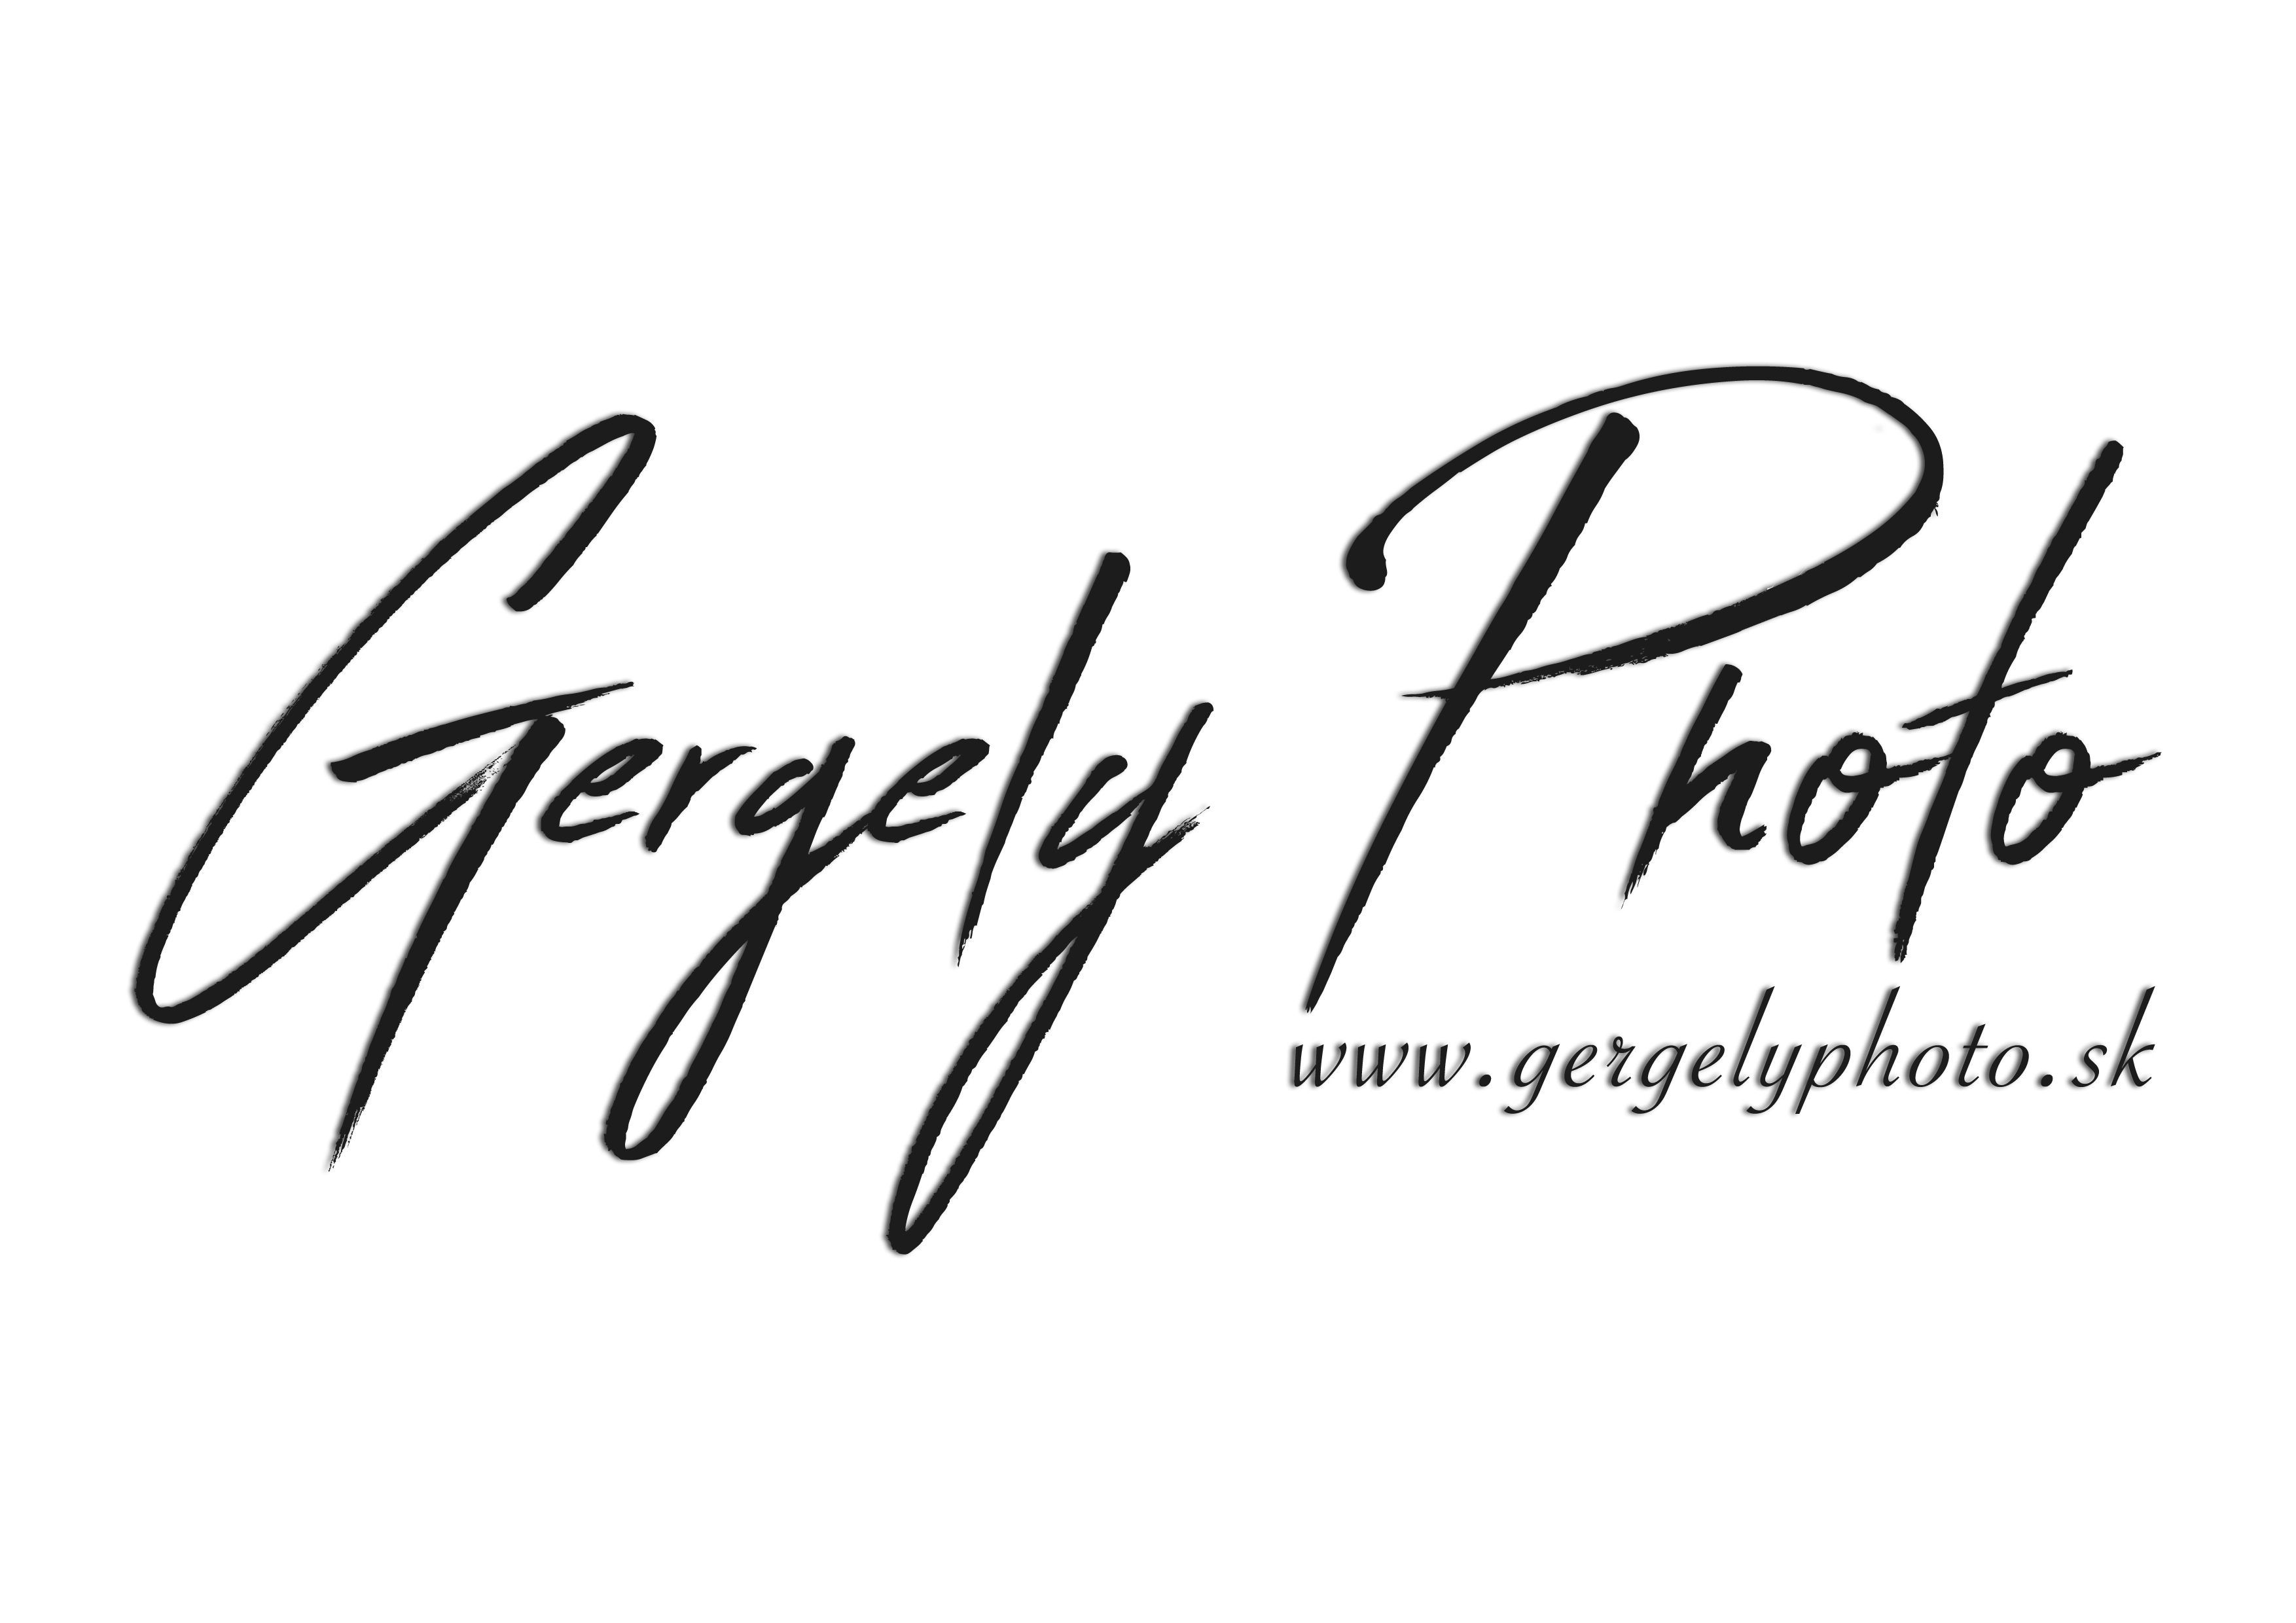 Gergely Photo